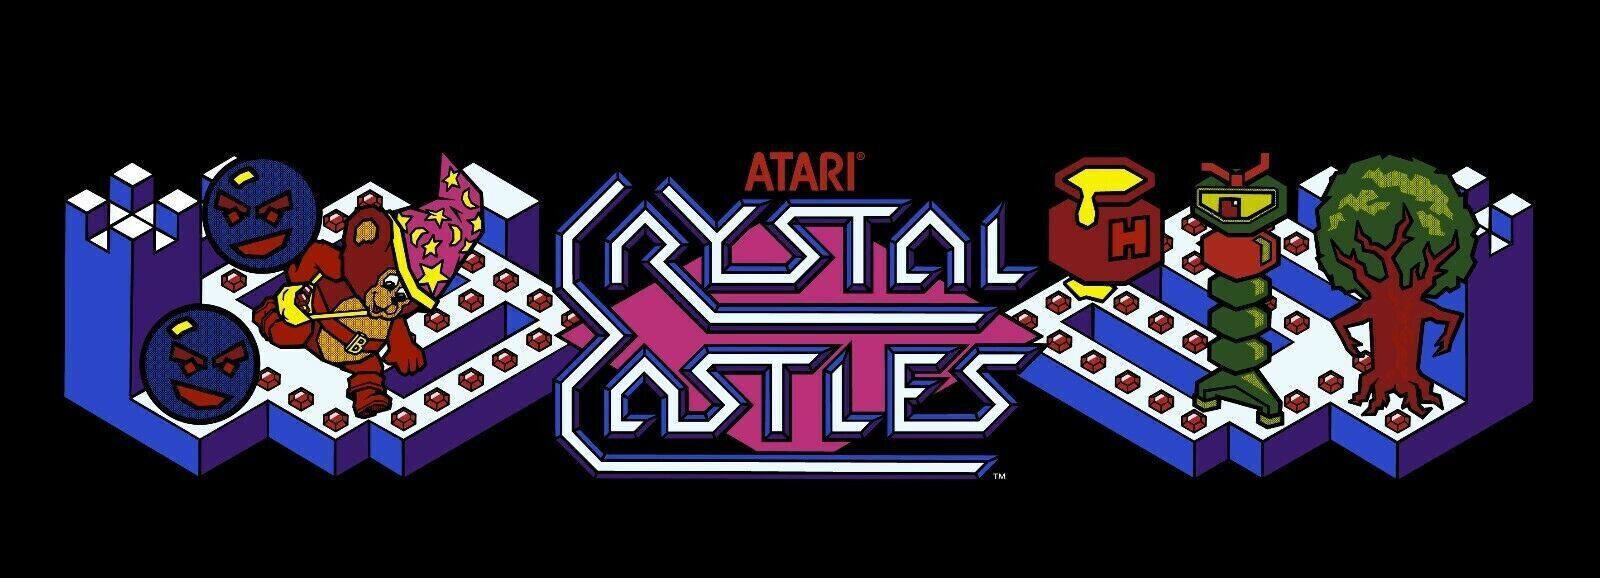 Crystal Castles Arcade Marquee/Sign (26\